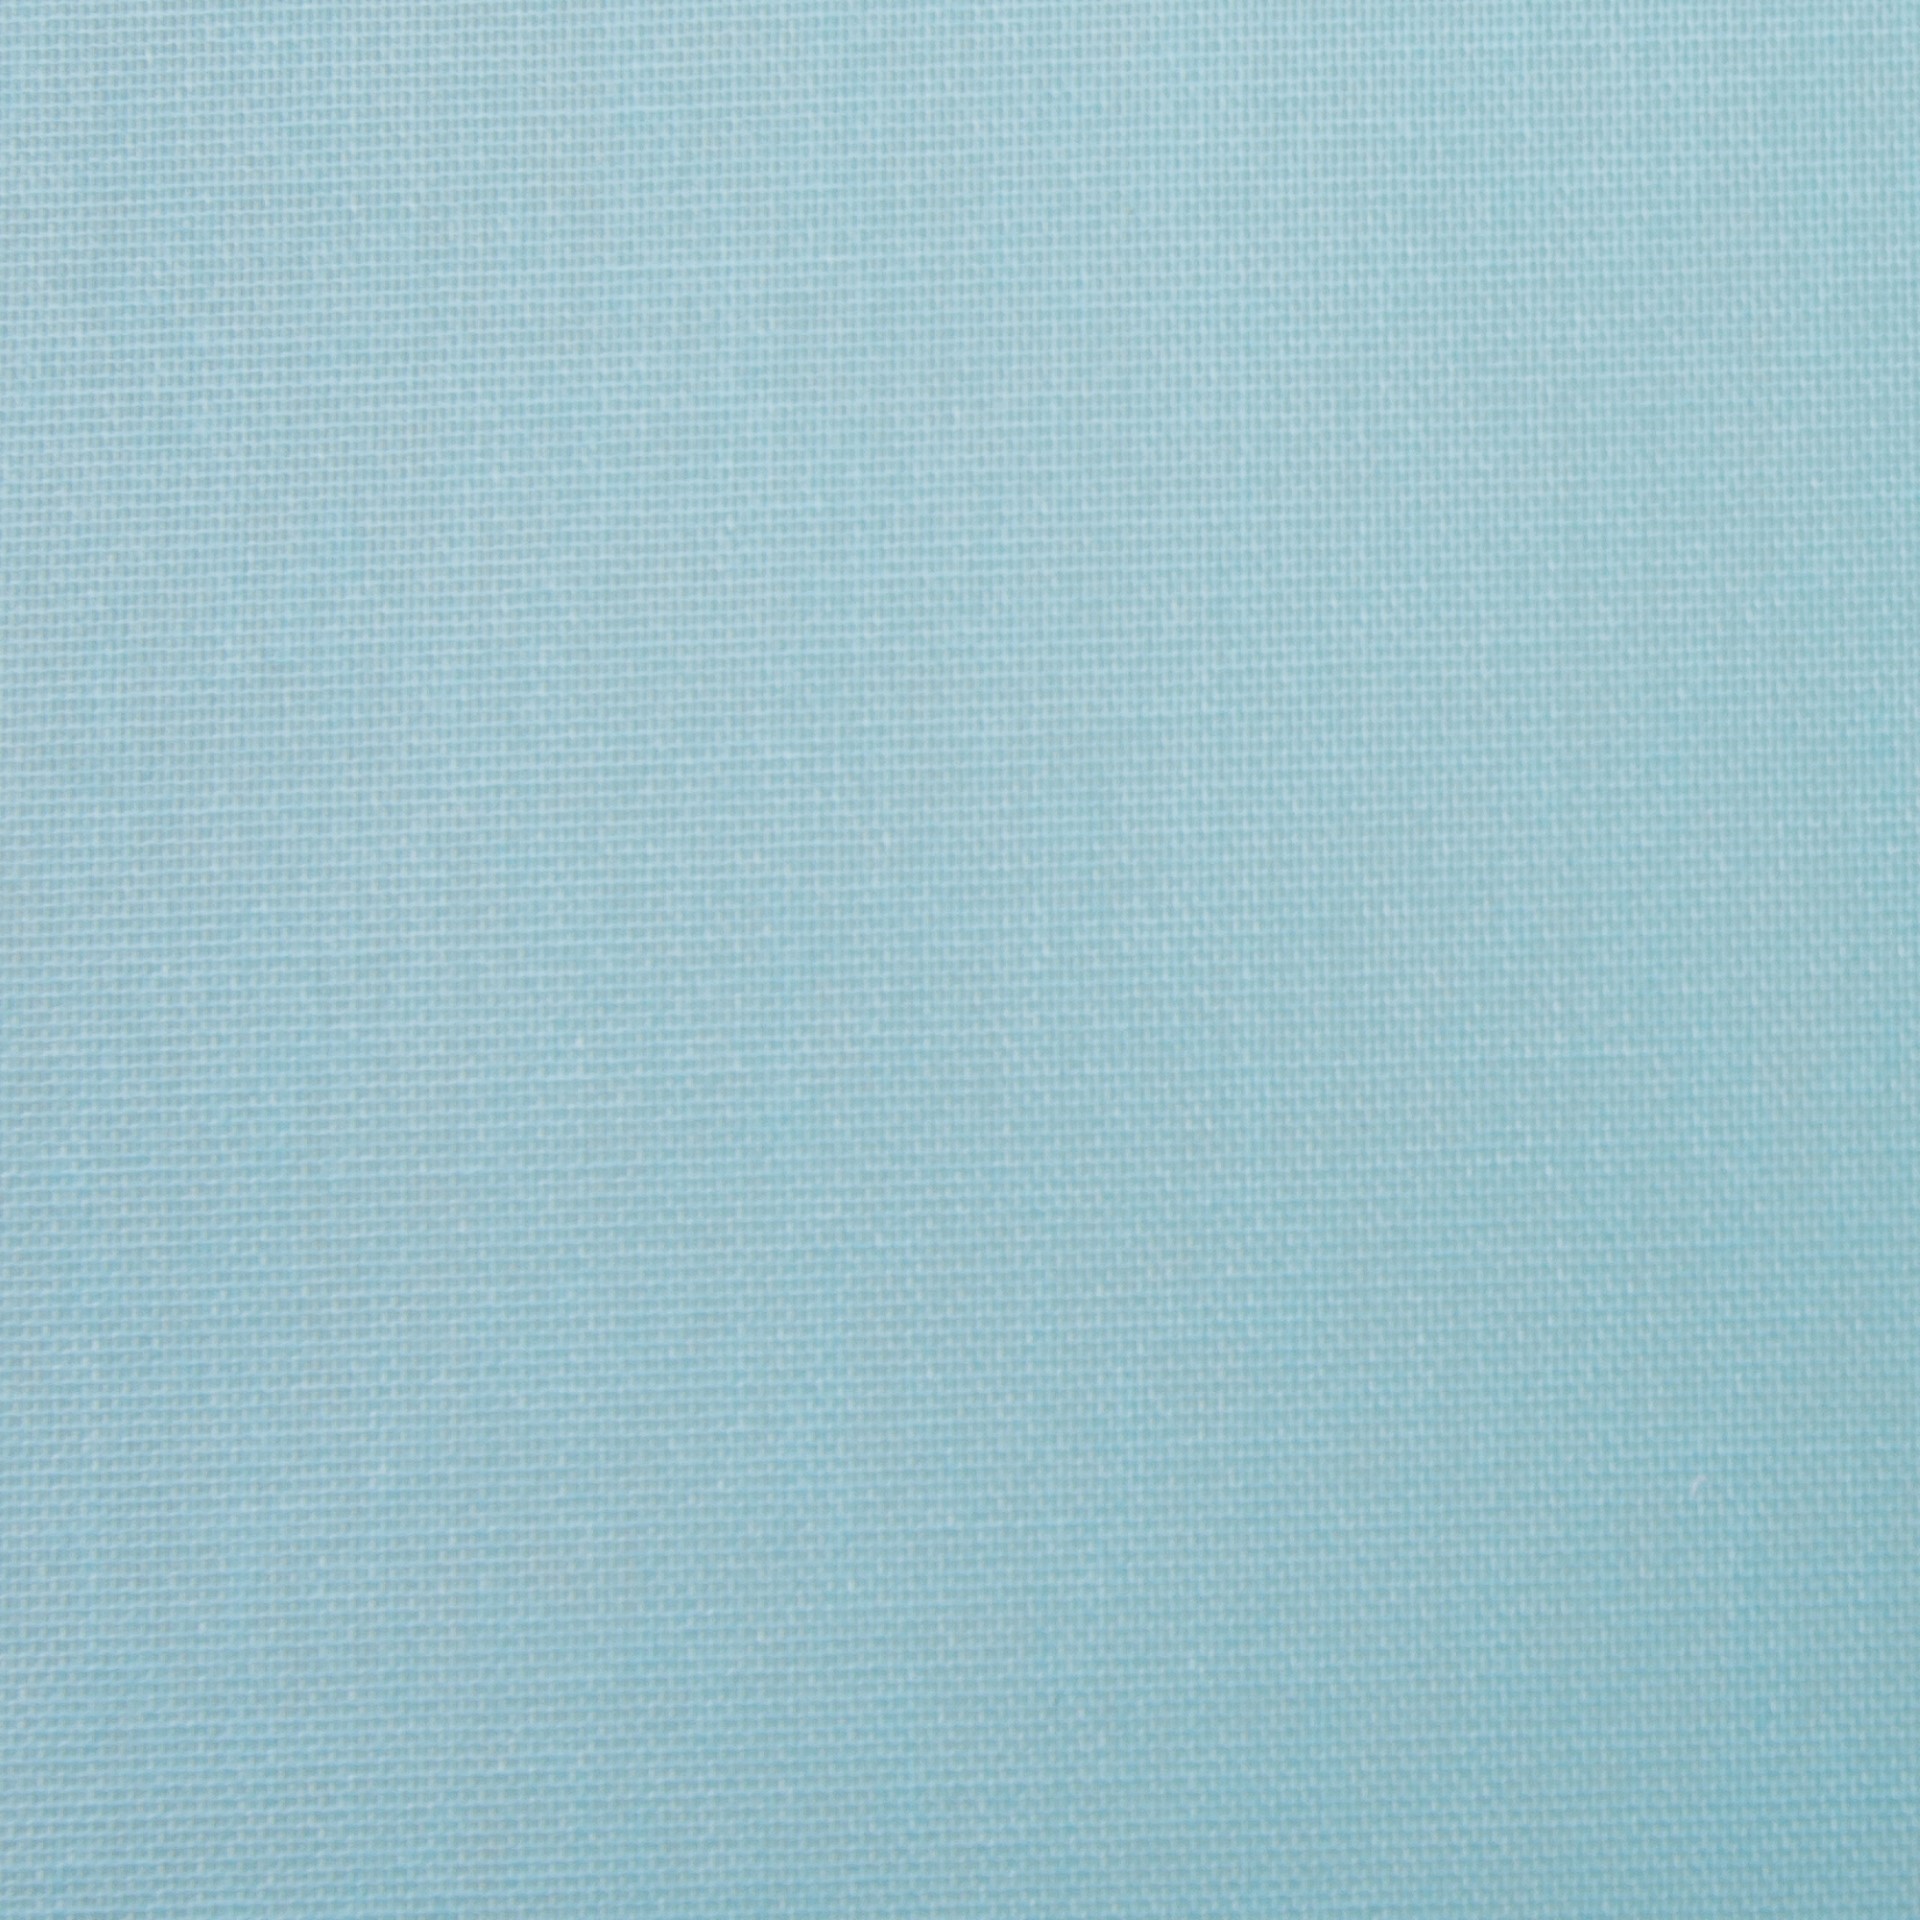 Essenza Translucent Roller Blind Blue Fabric Detail